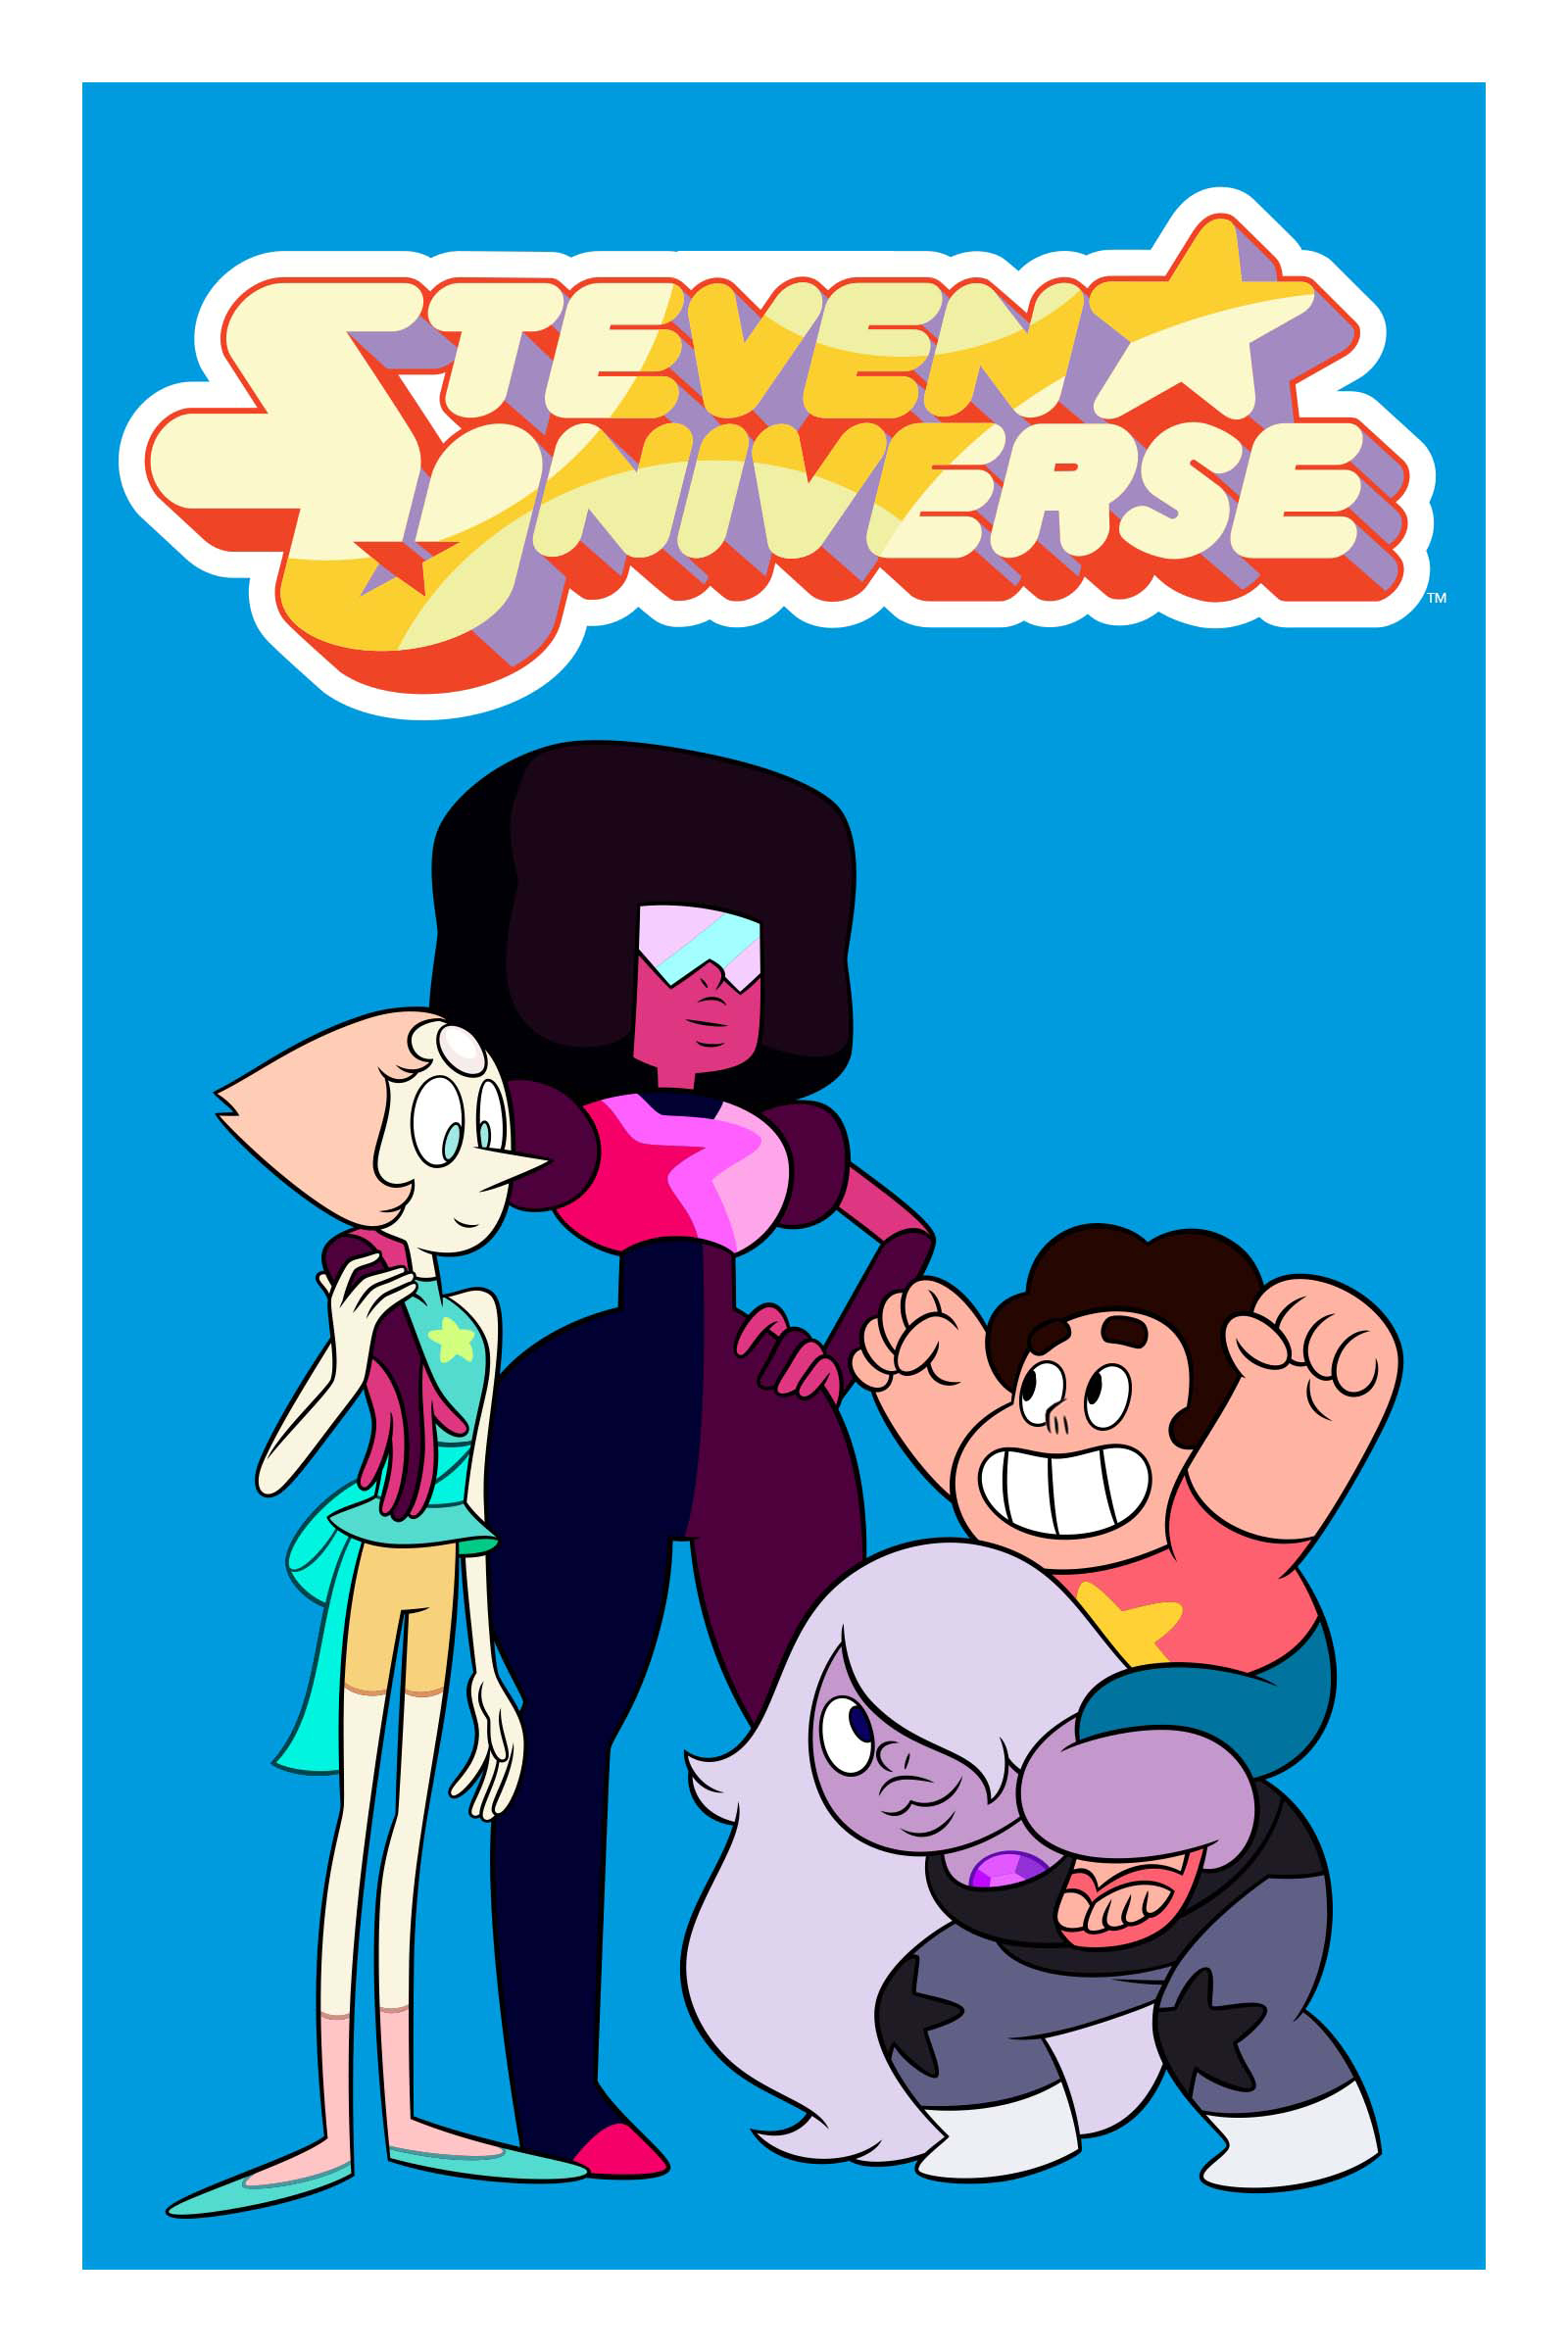 Steven Universe Season 3 - watch episodes streaming online